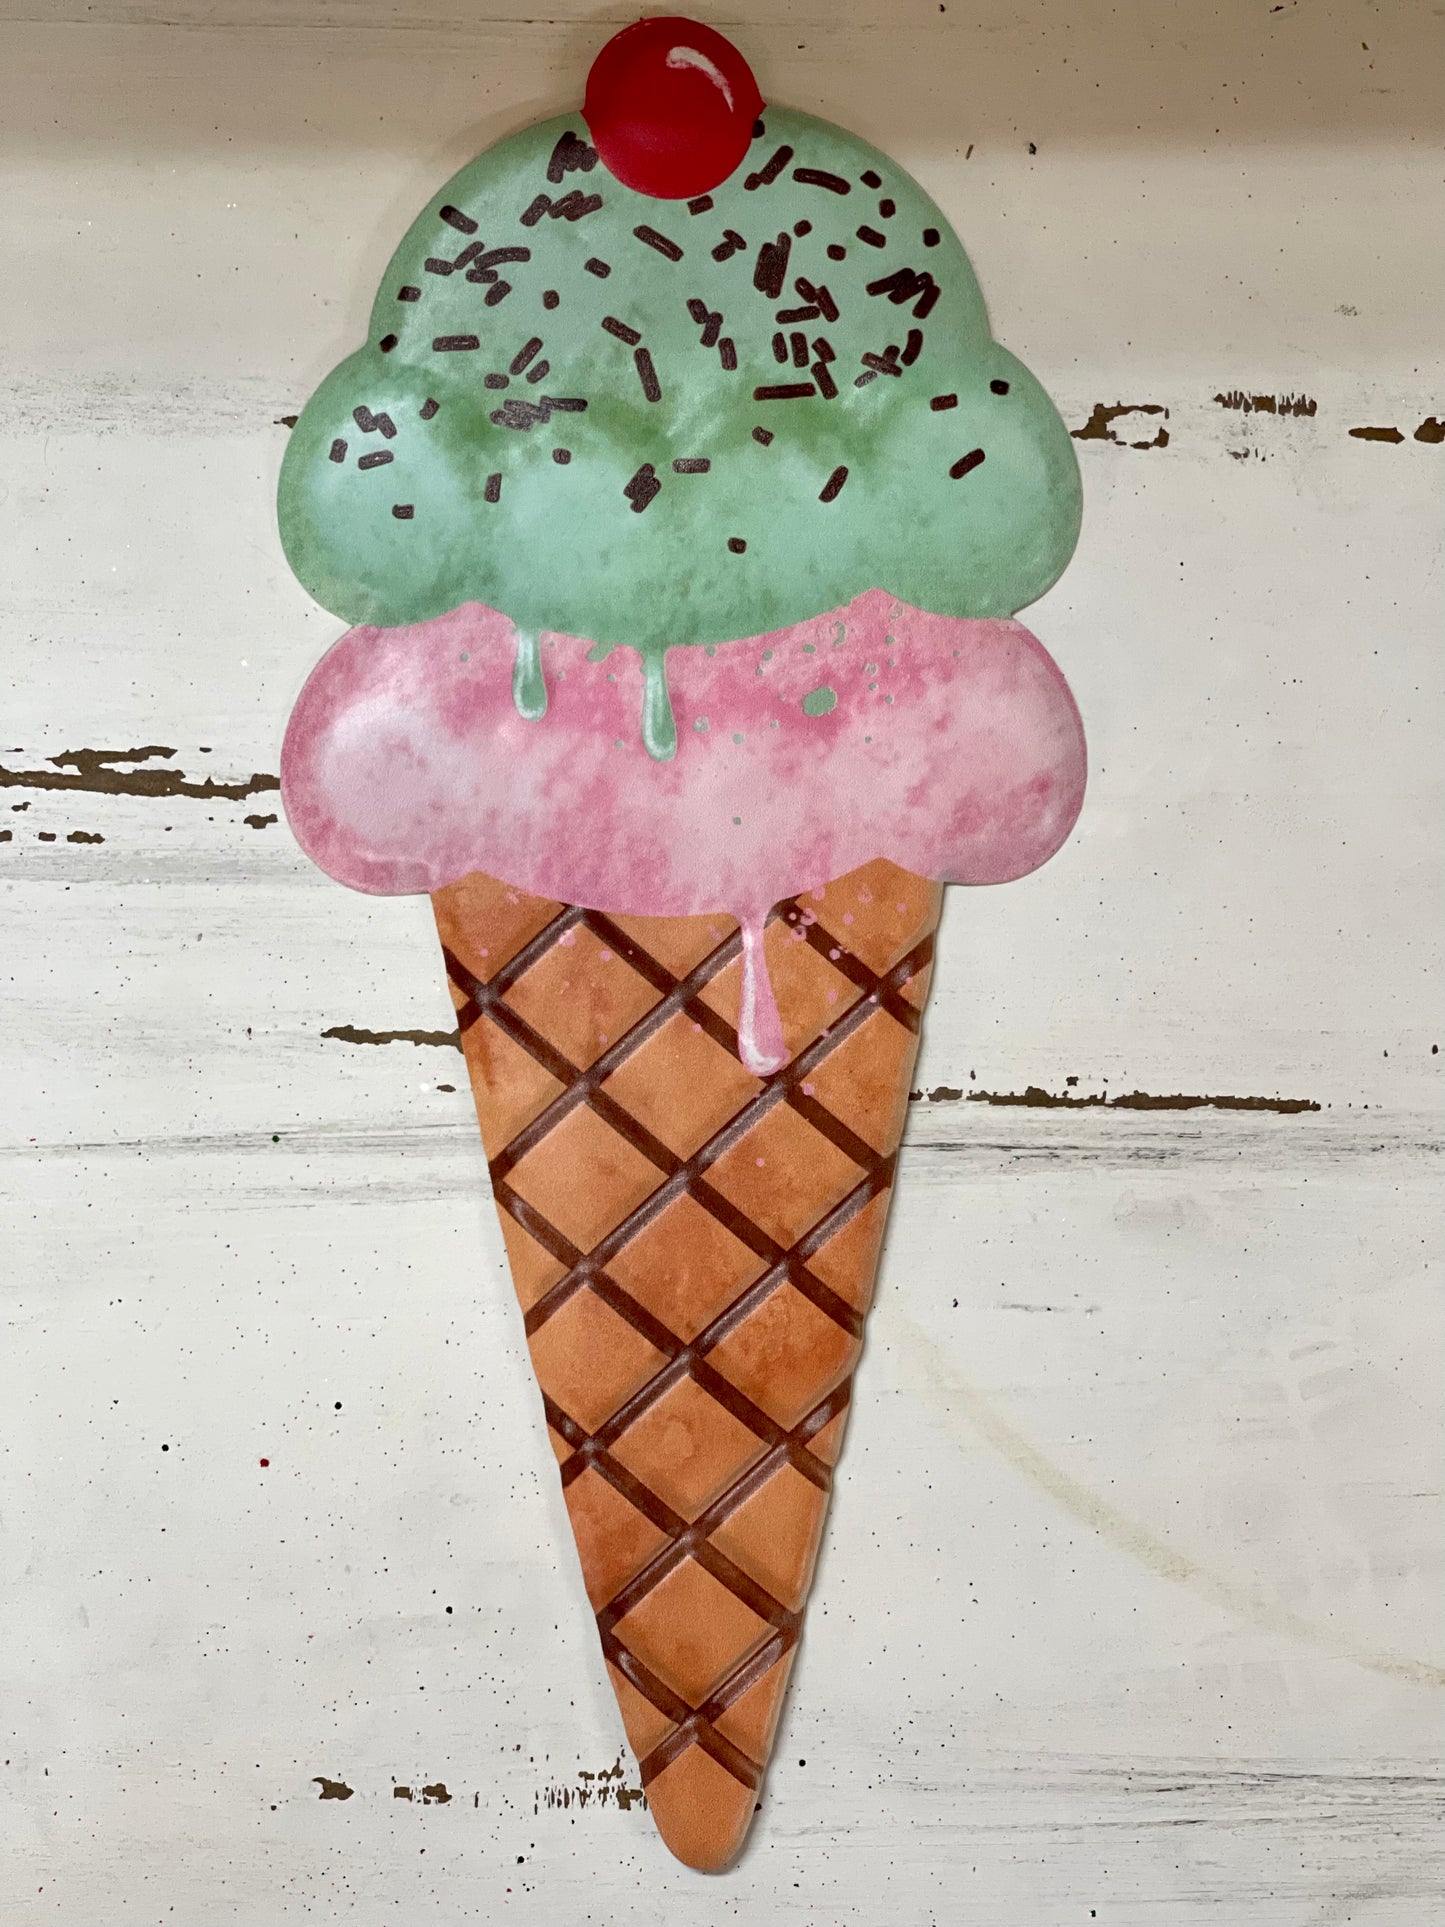 Ice Cream Cone Metal Sign Three Different Styles